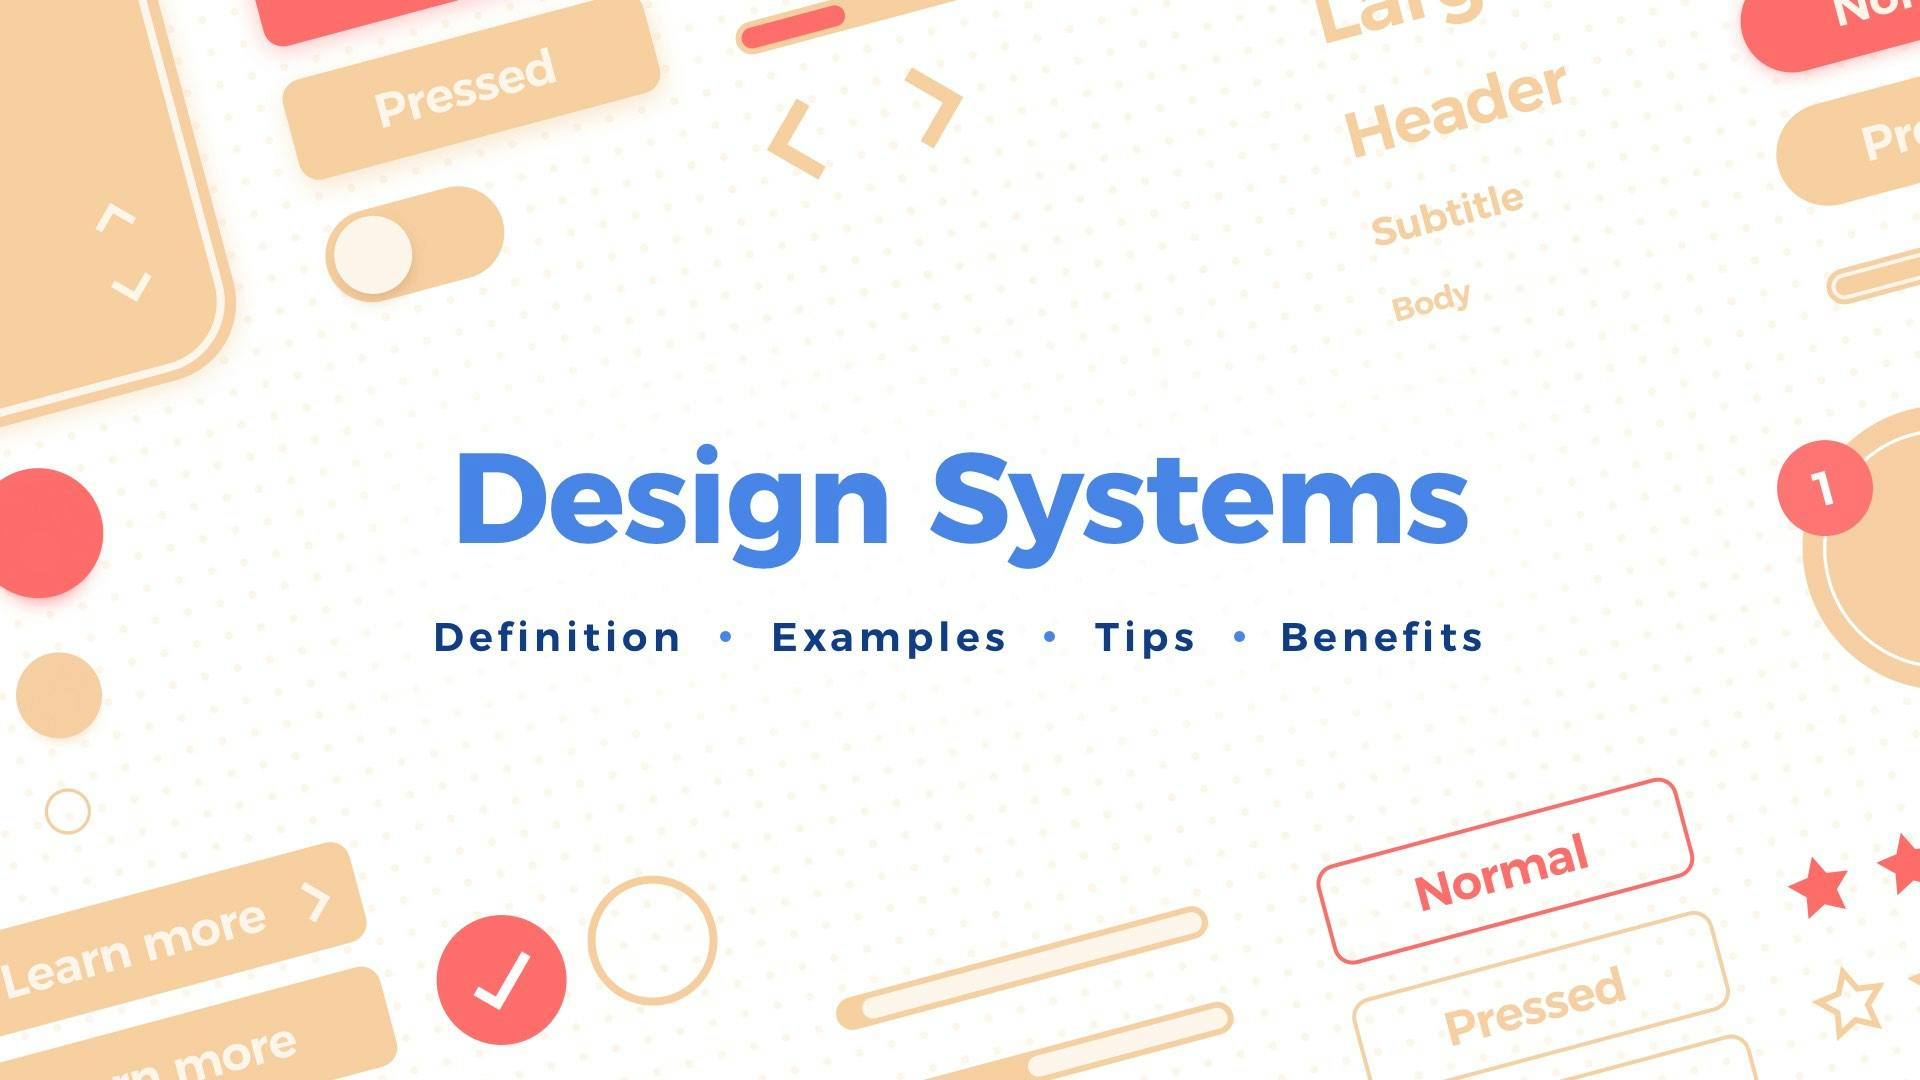 Design System Benefits